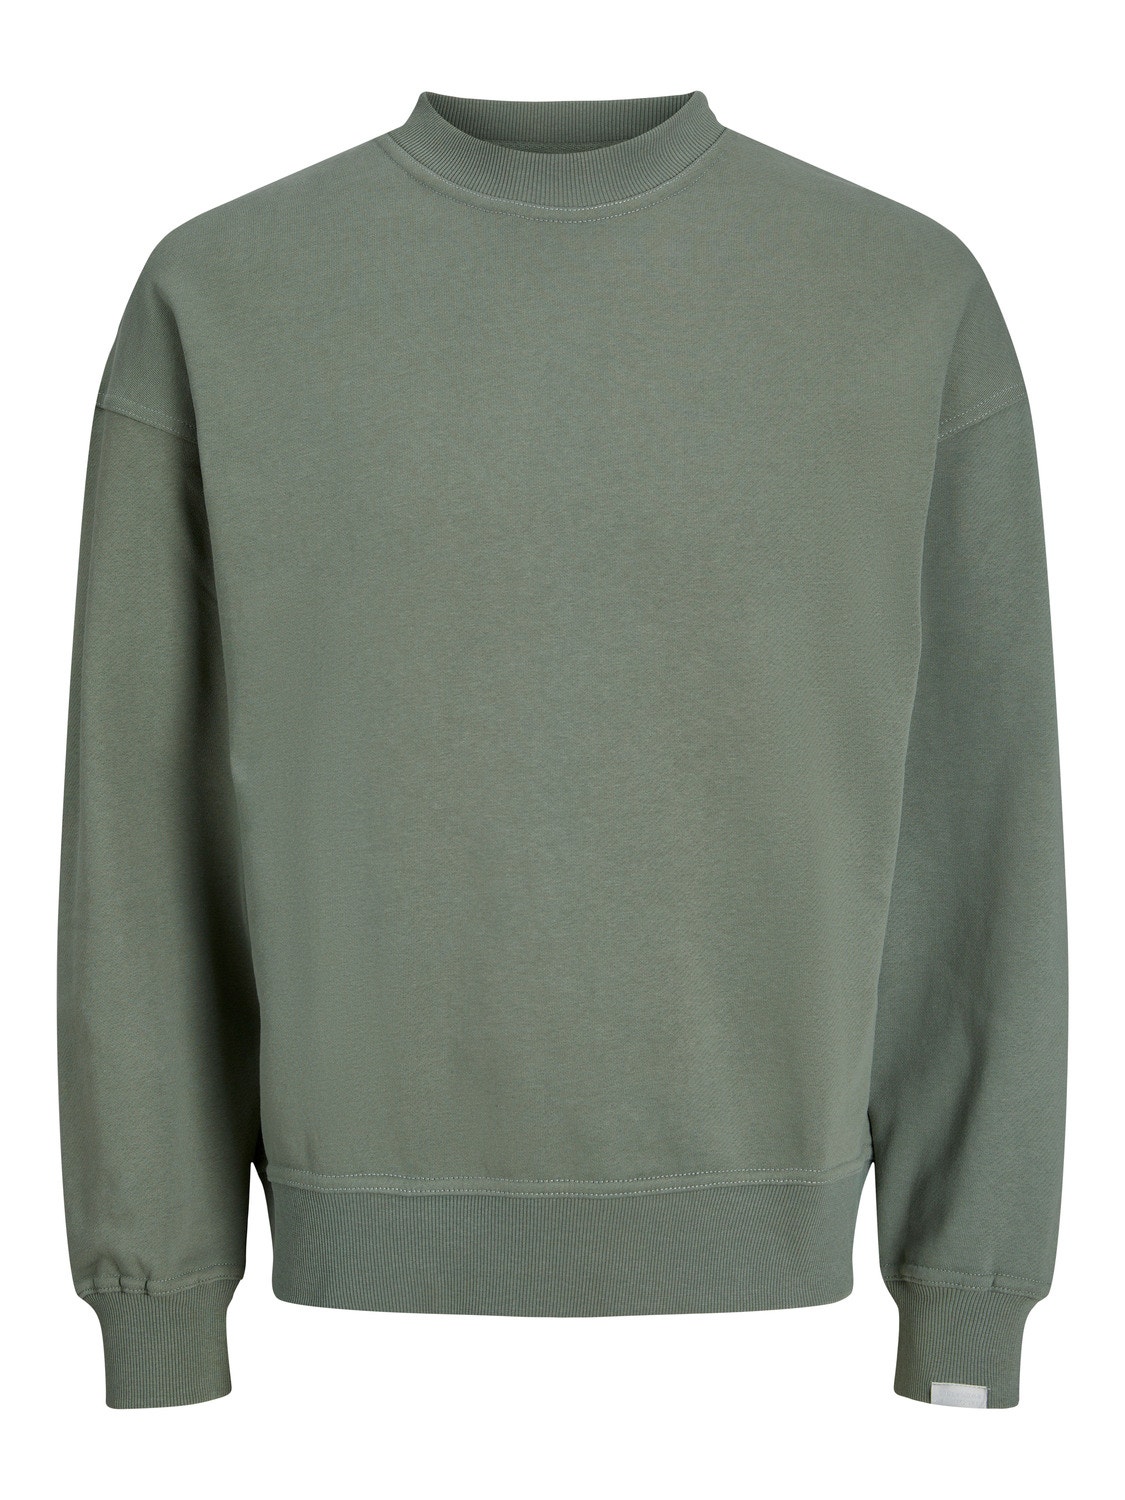 Jack & Jones Plain Crew neck Sweatshirt -Agave Green - 12251330